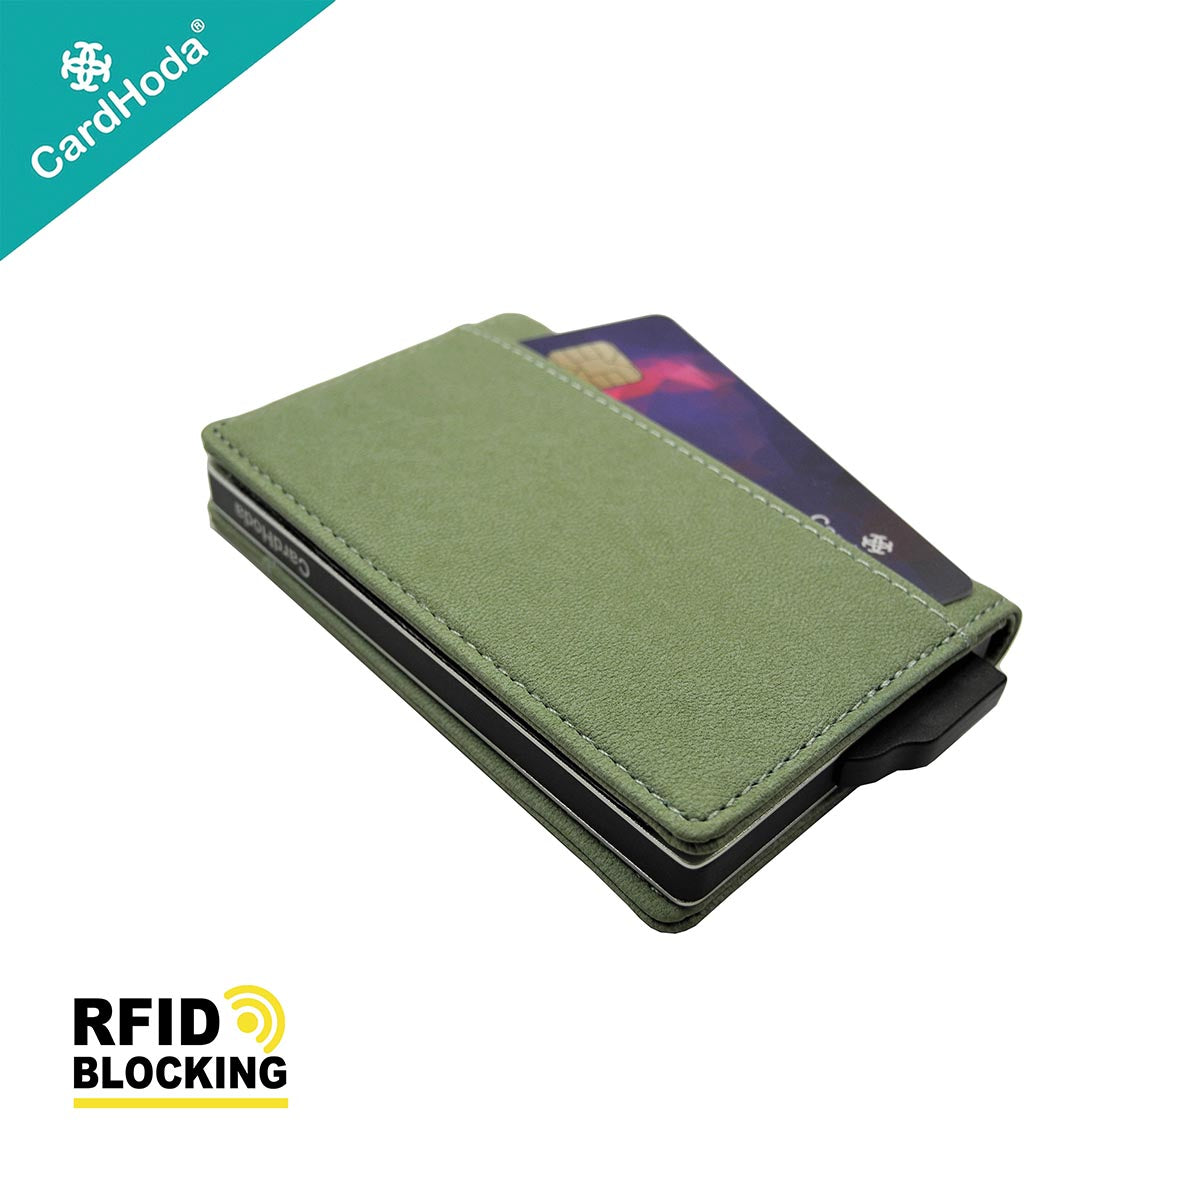 Cardhoda - RFID Mini防盜卡 PU錢包 (P04040-6064)(孔雀藍/巖石灰/牛油果綠)